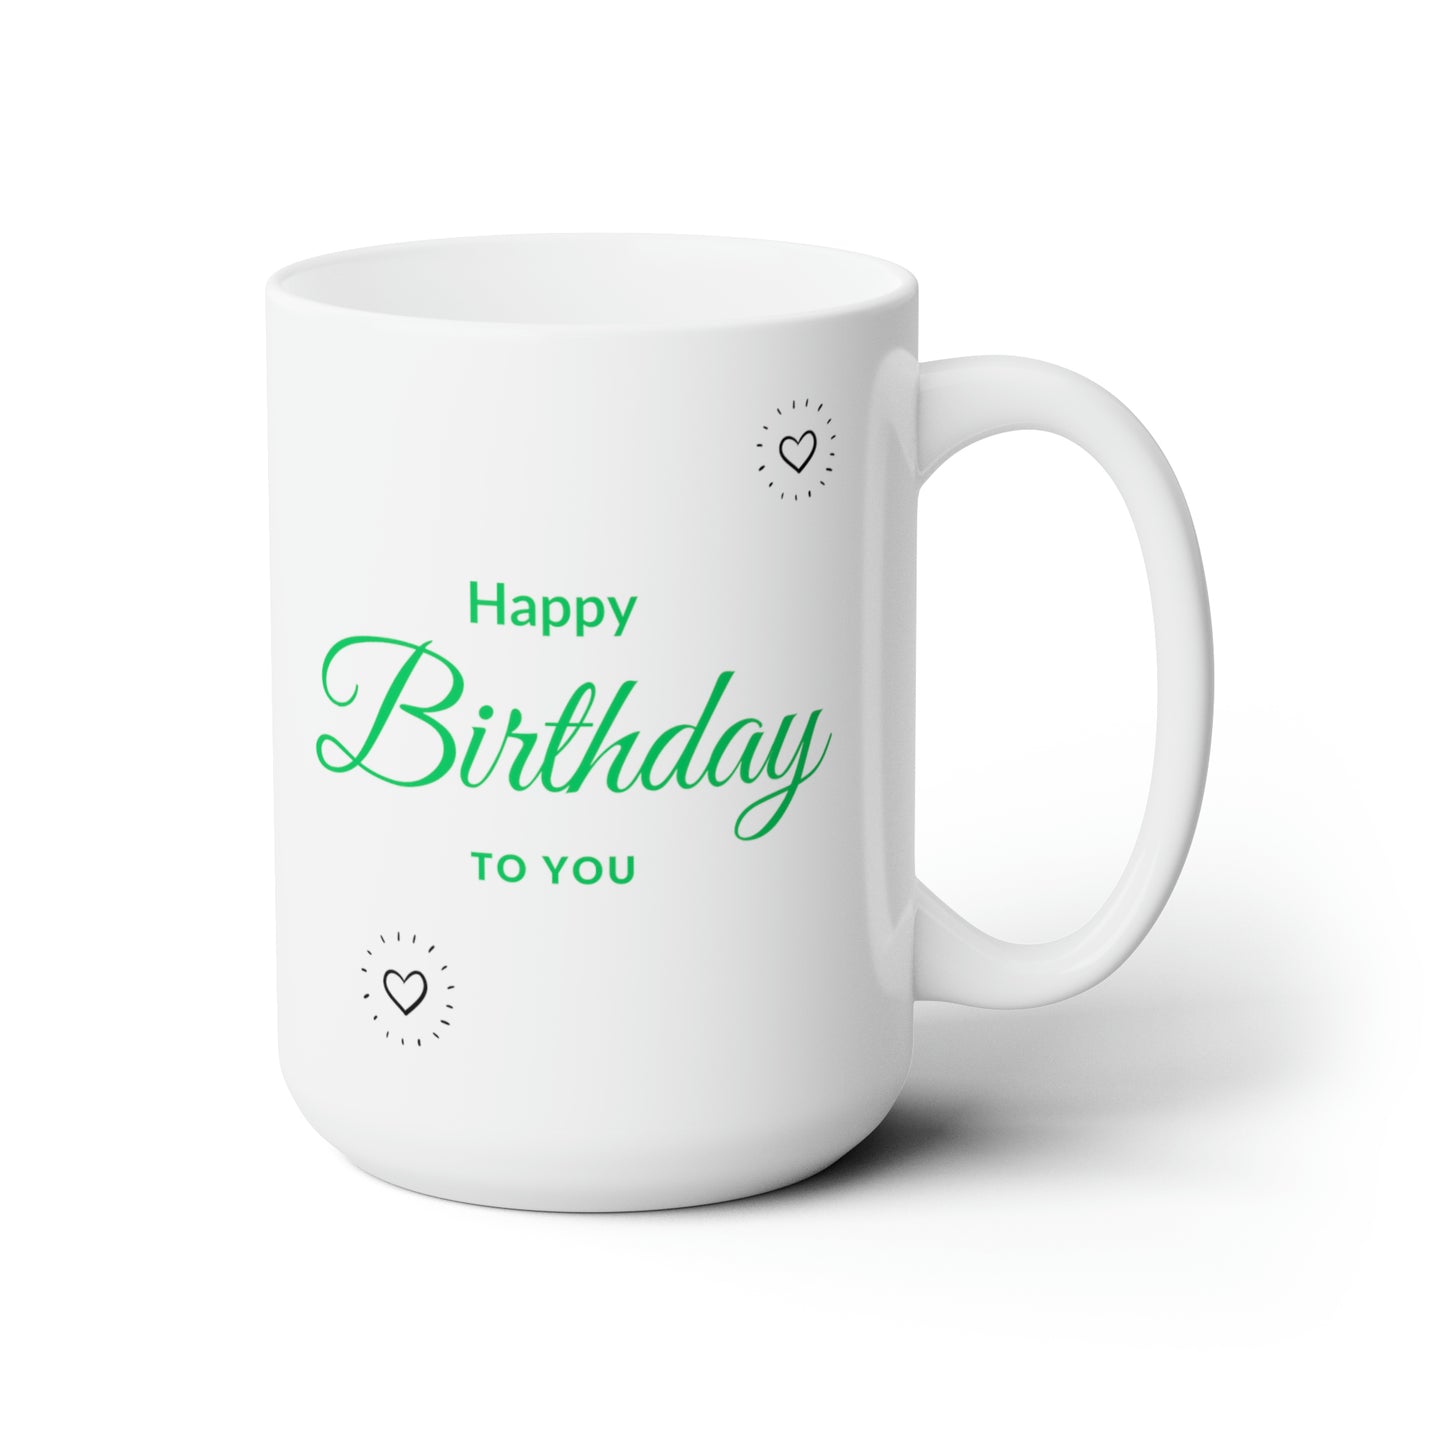 Happy Birthday to You Printed Mug, 15oz, White & Green